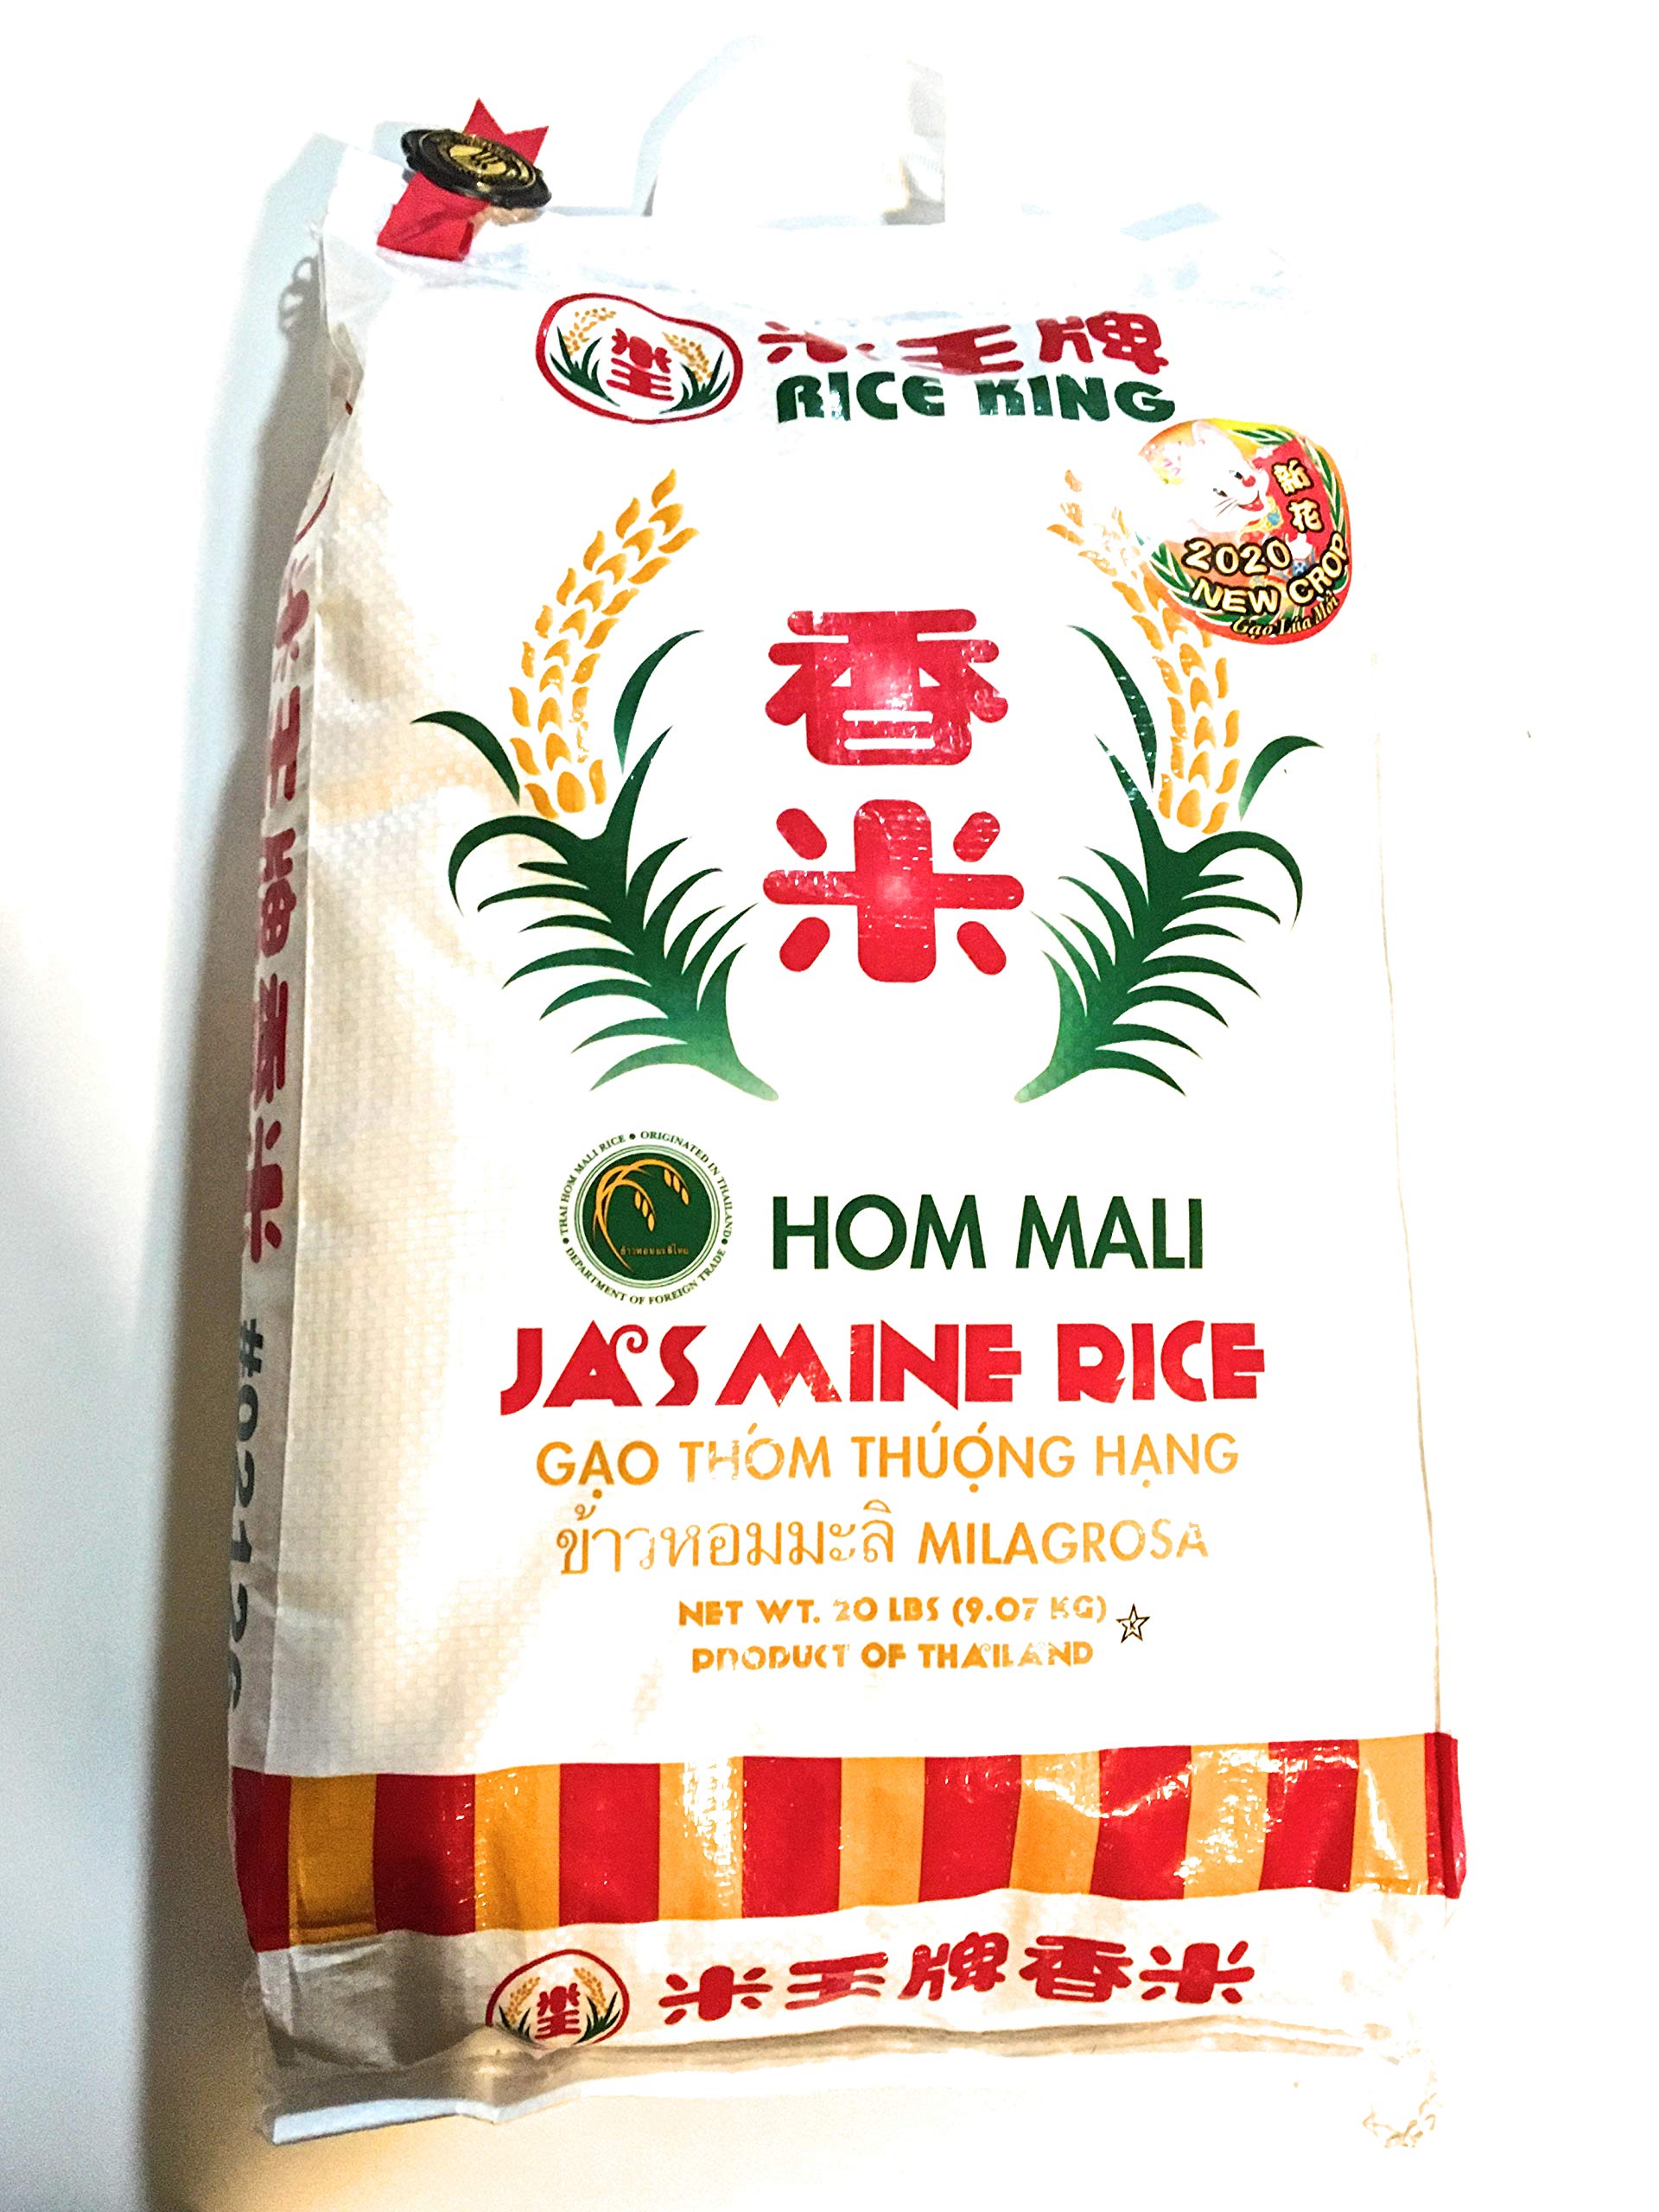 Rice King Hom Mali Jasmine Rice 20 Lbs 米王牌香米